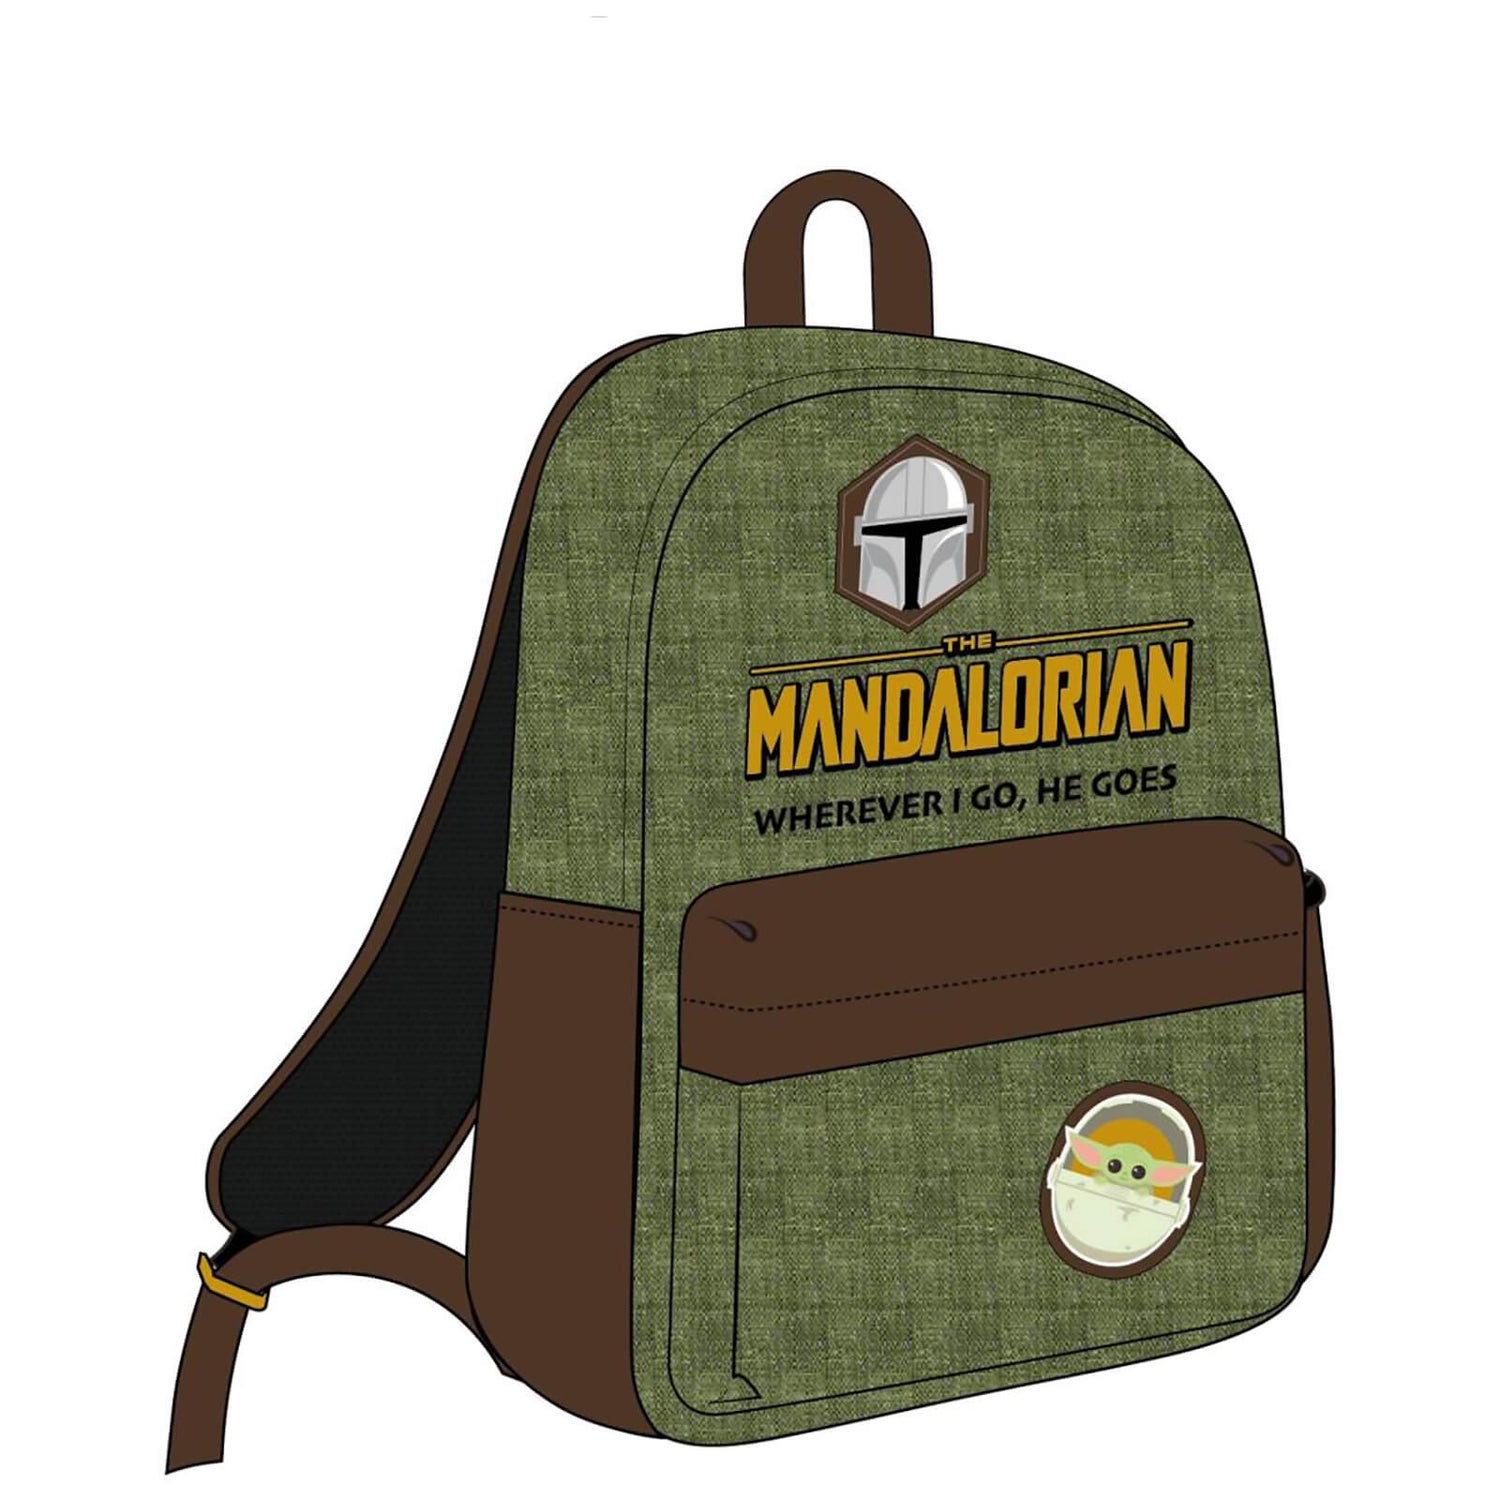 The Mandalorian Wherever I Go, He Goes Backpack